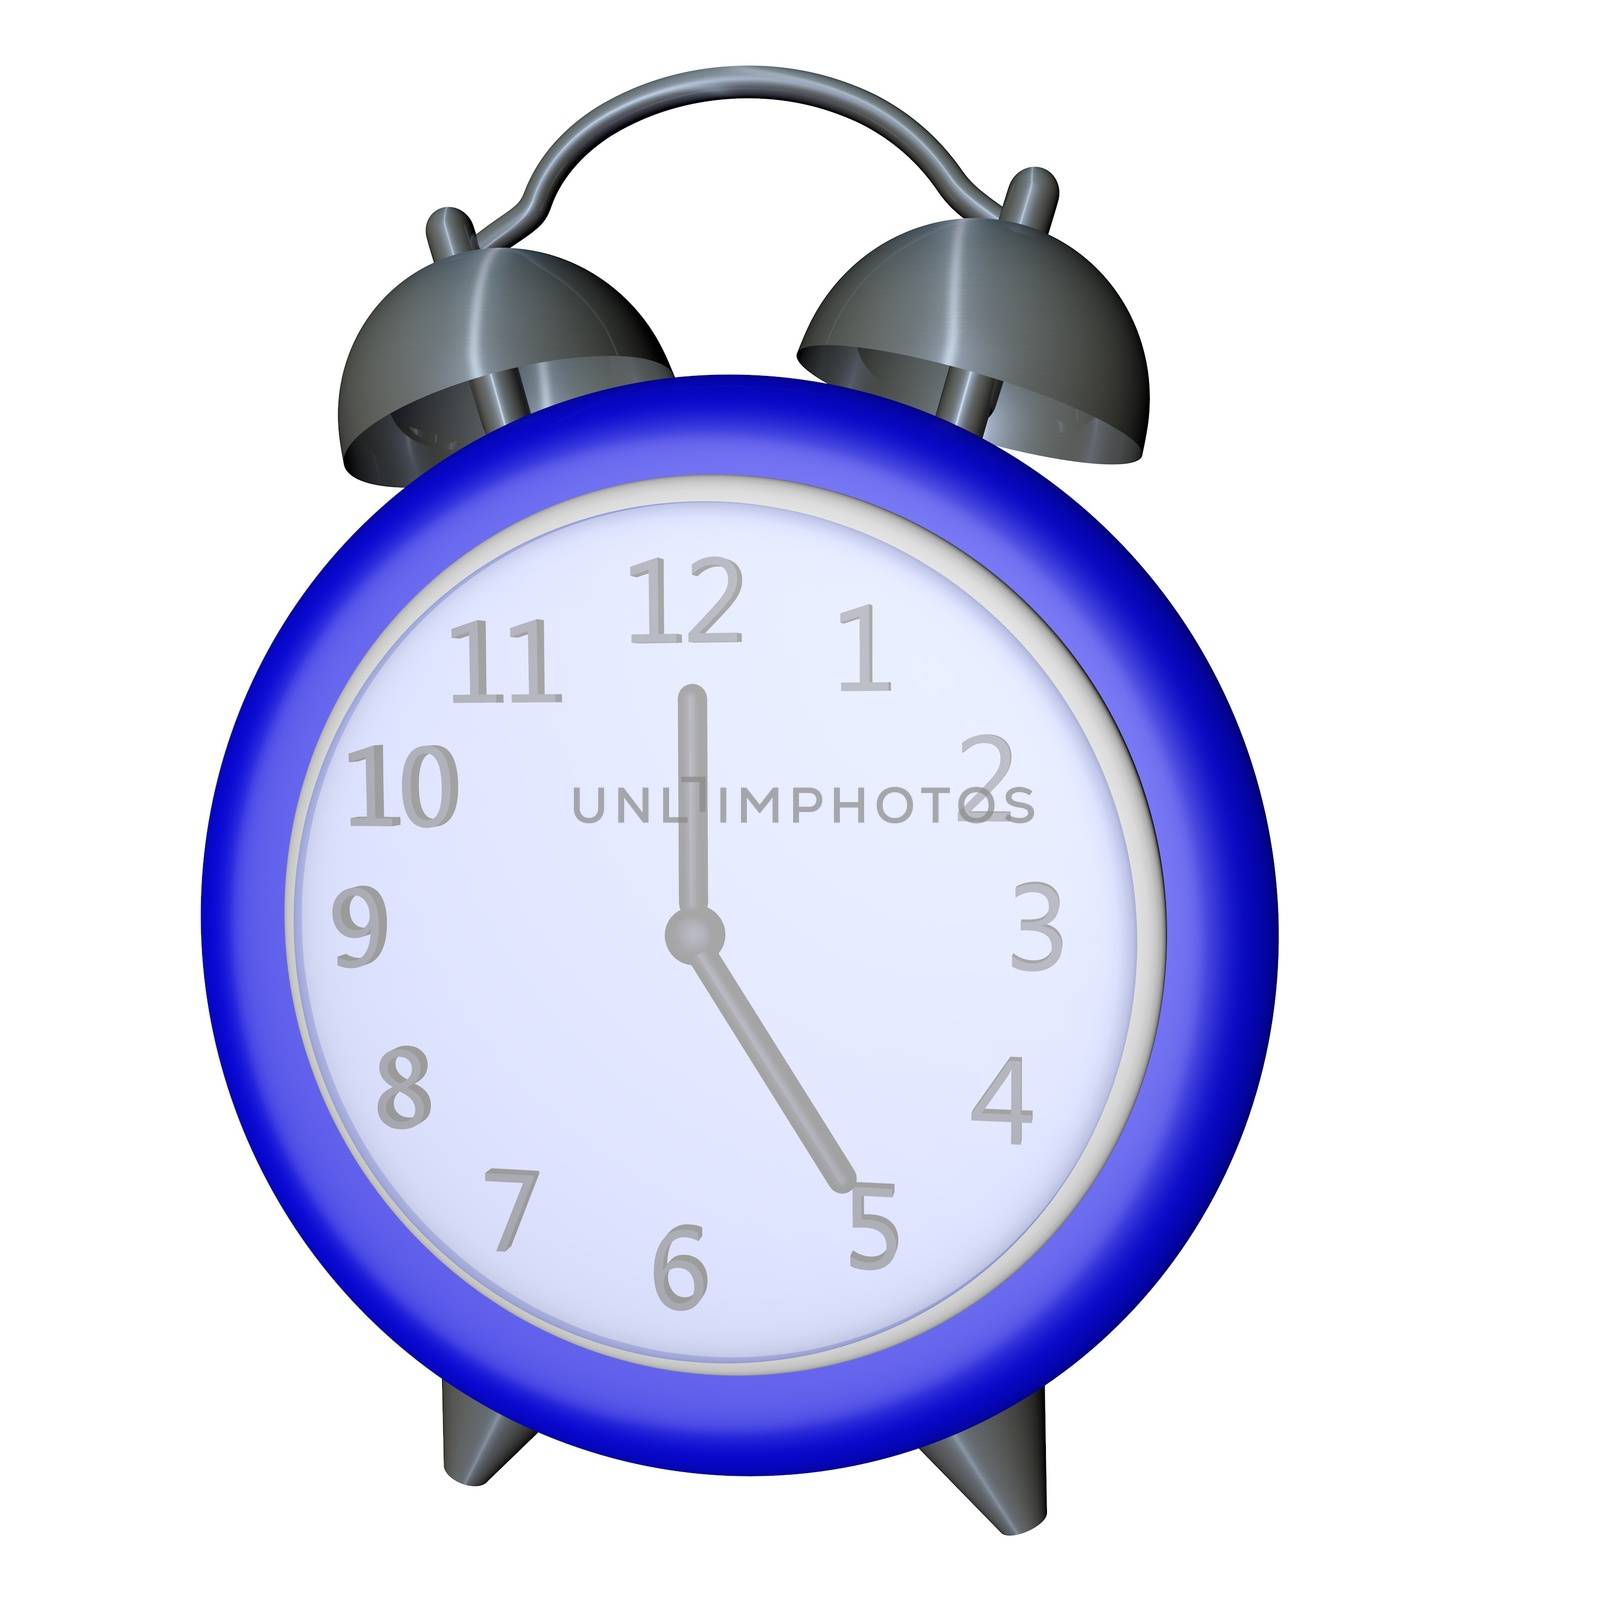 Alarm clock by Koufax73